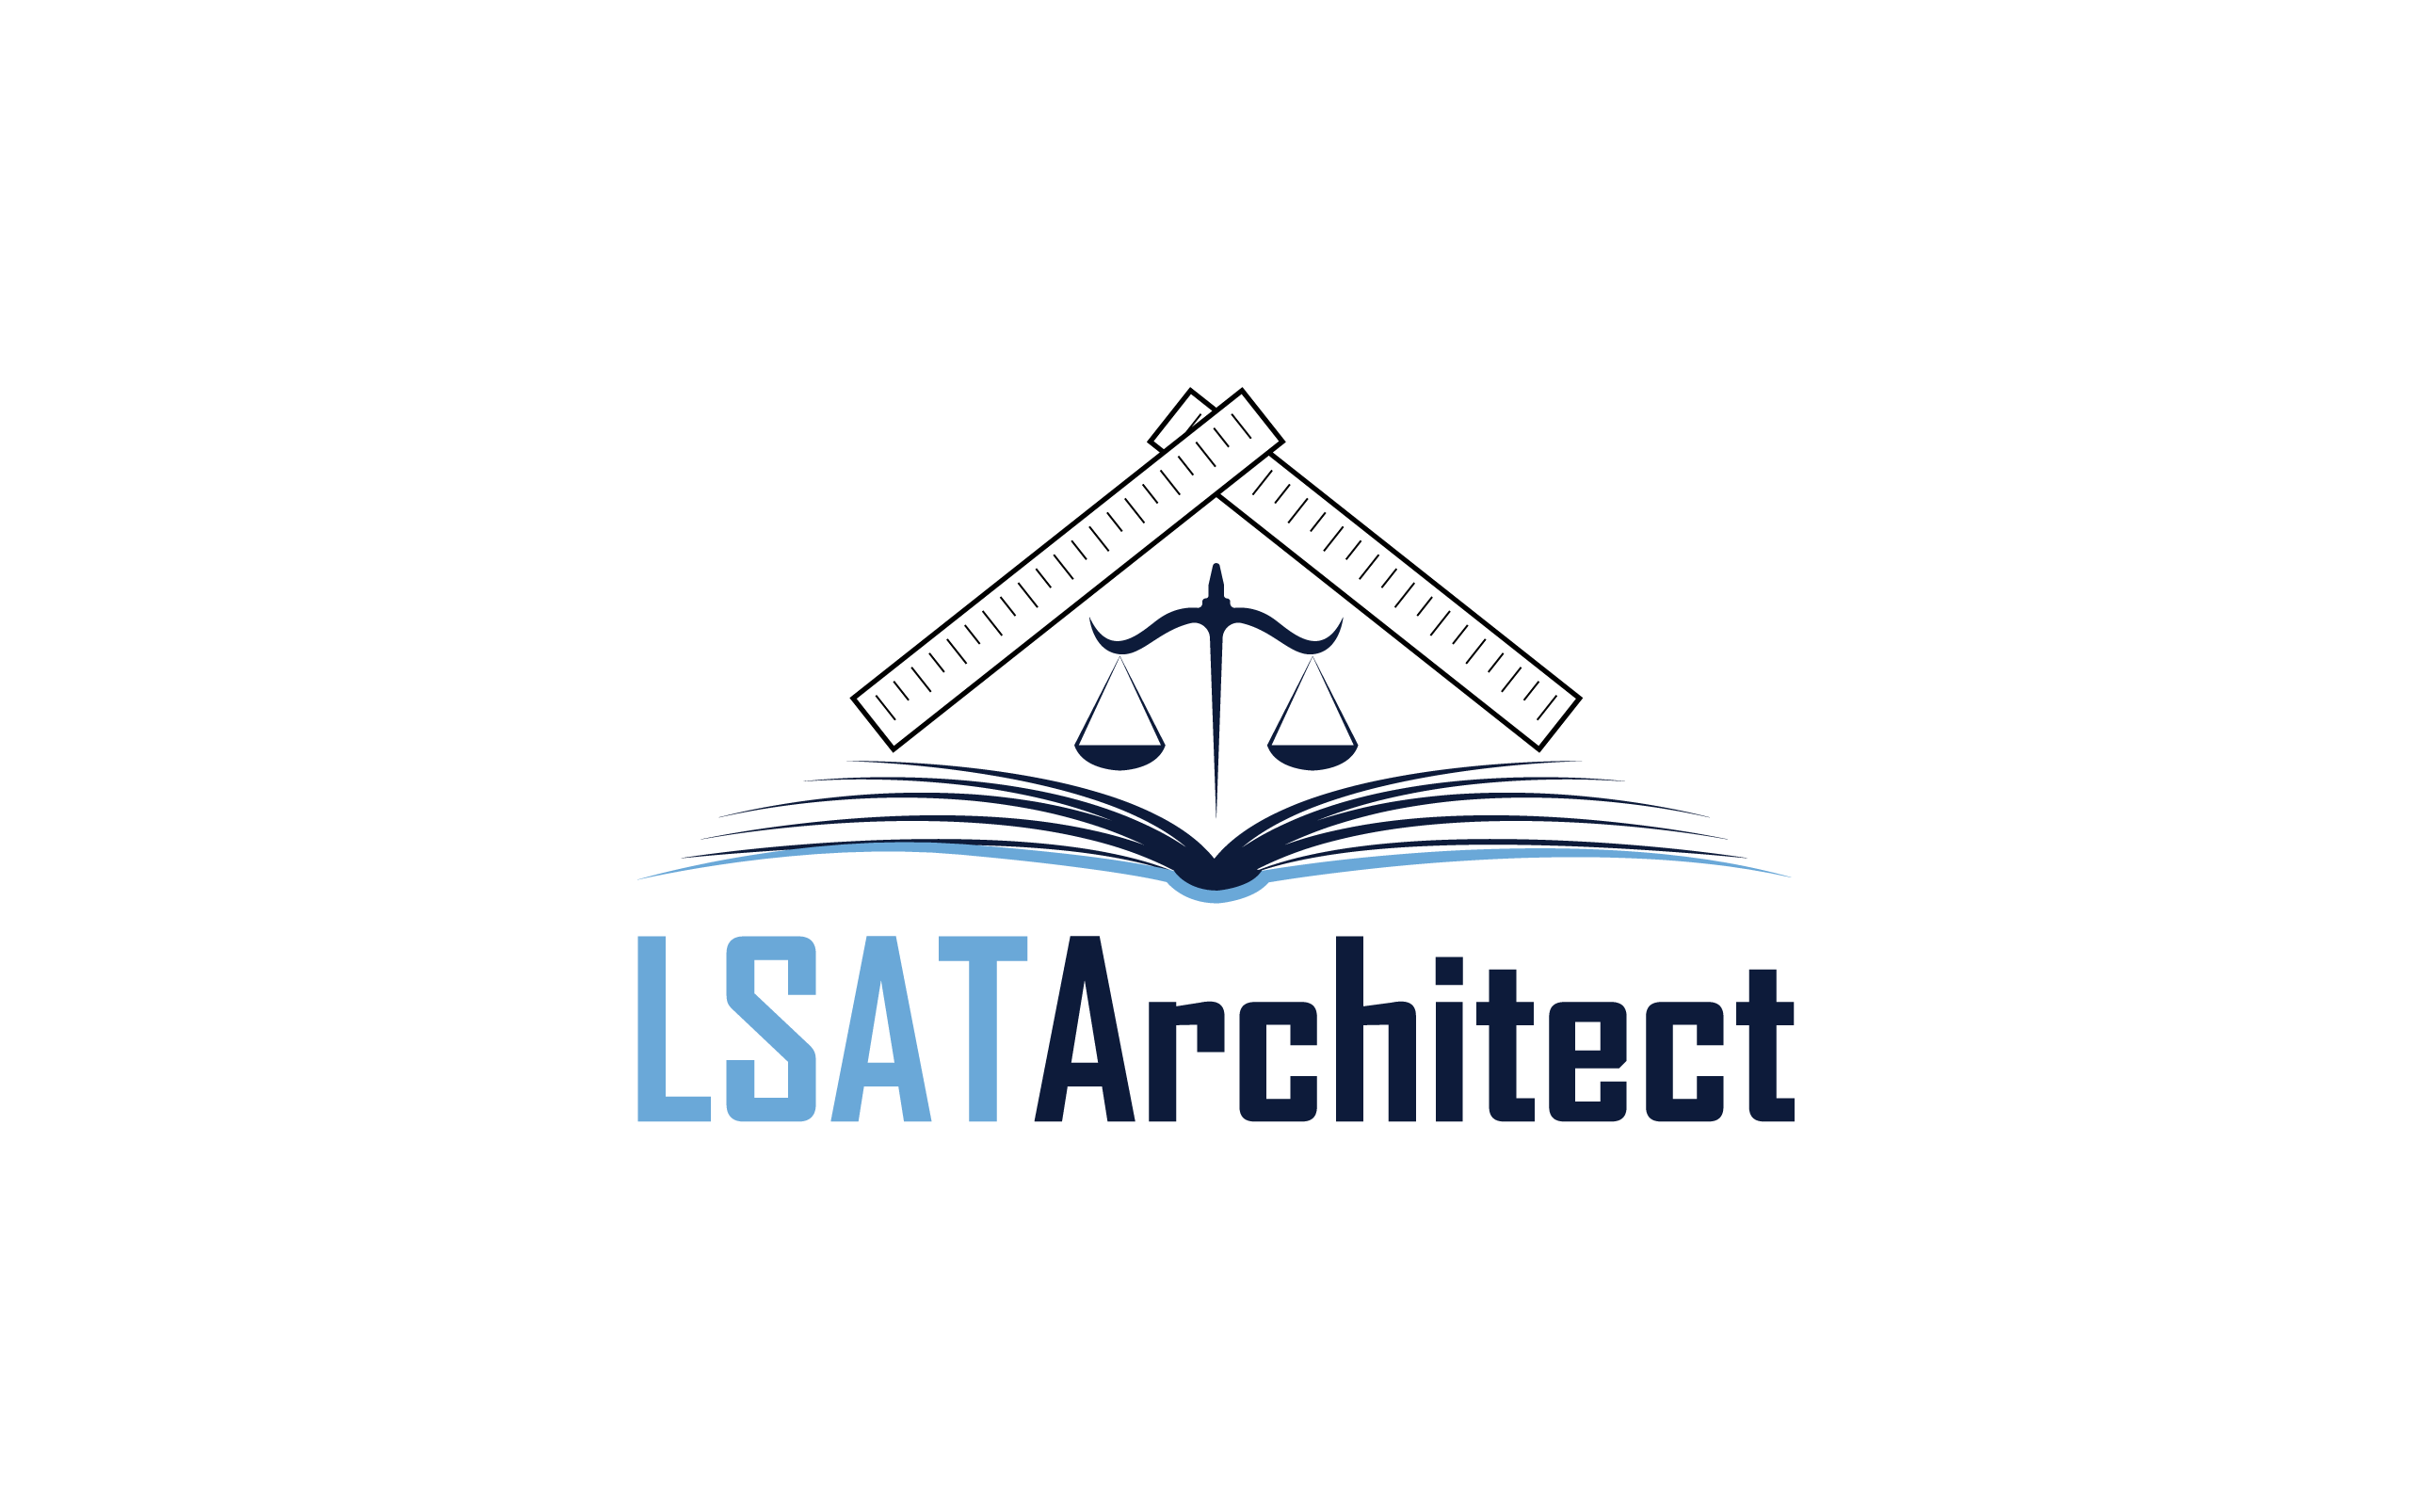 About The LSAT Architect